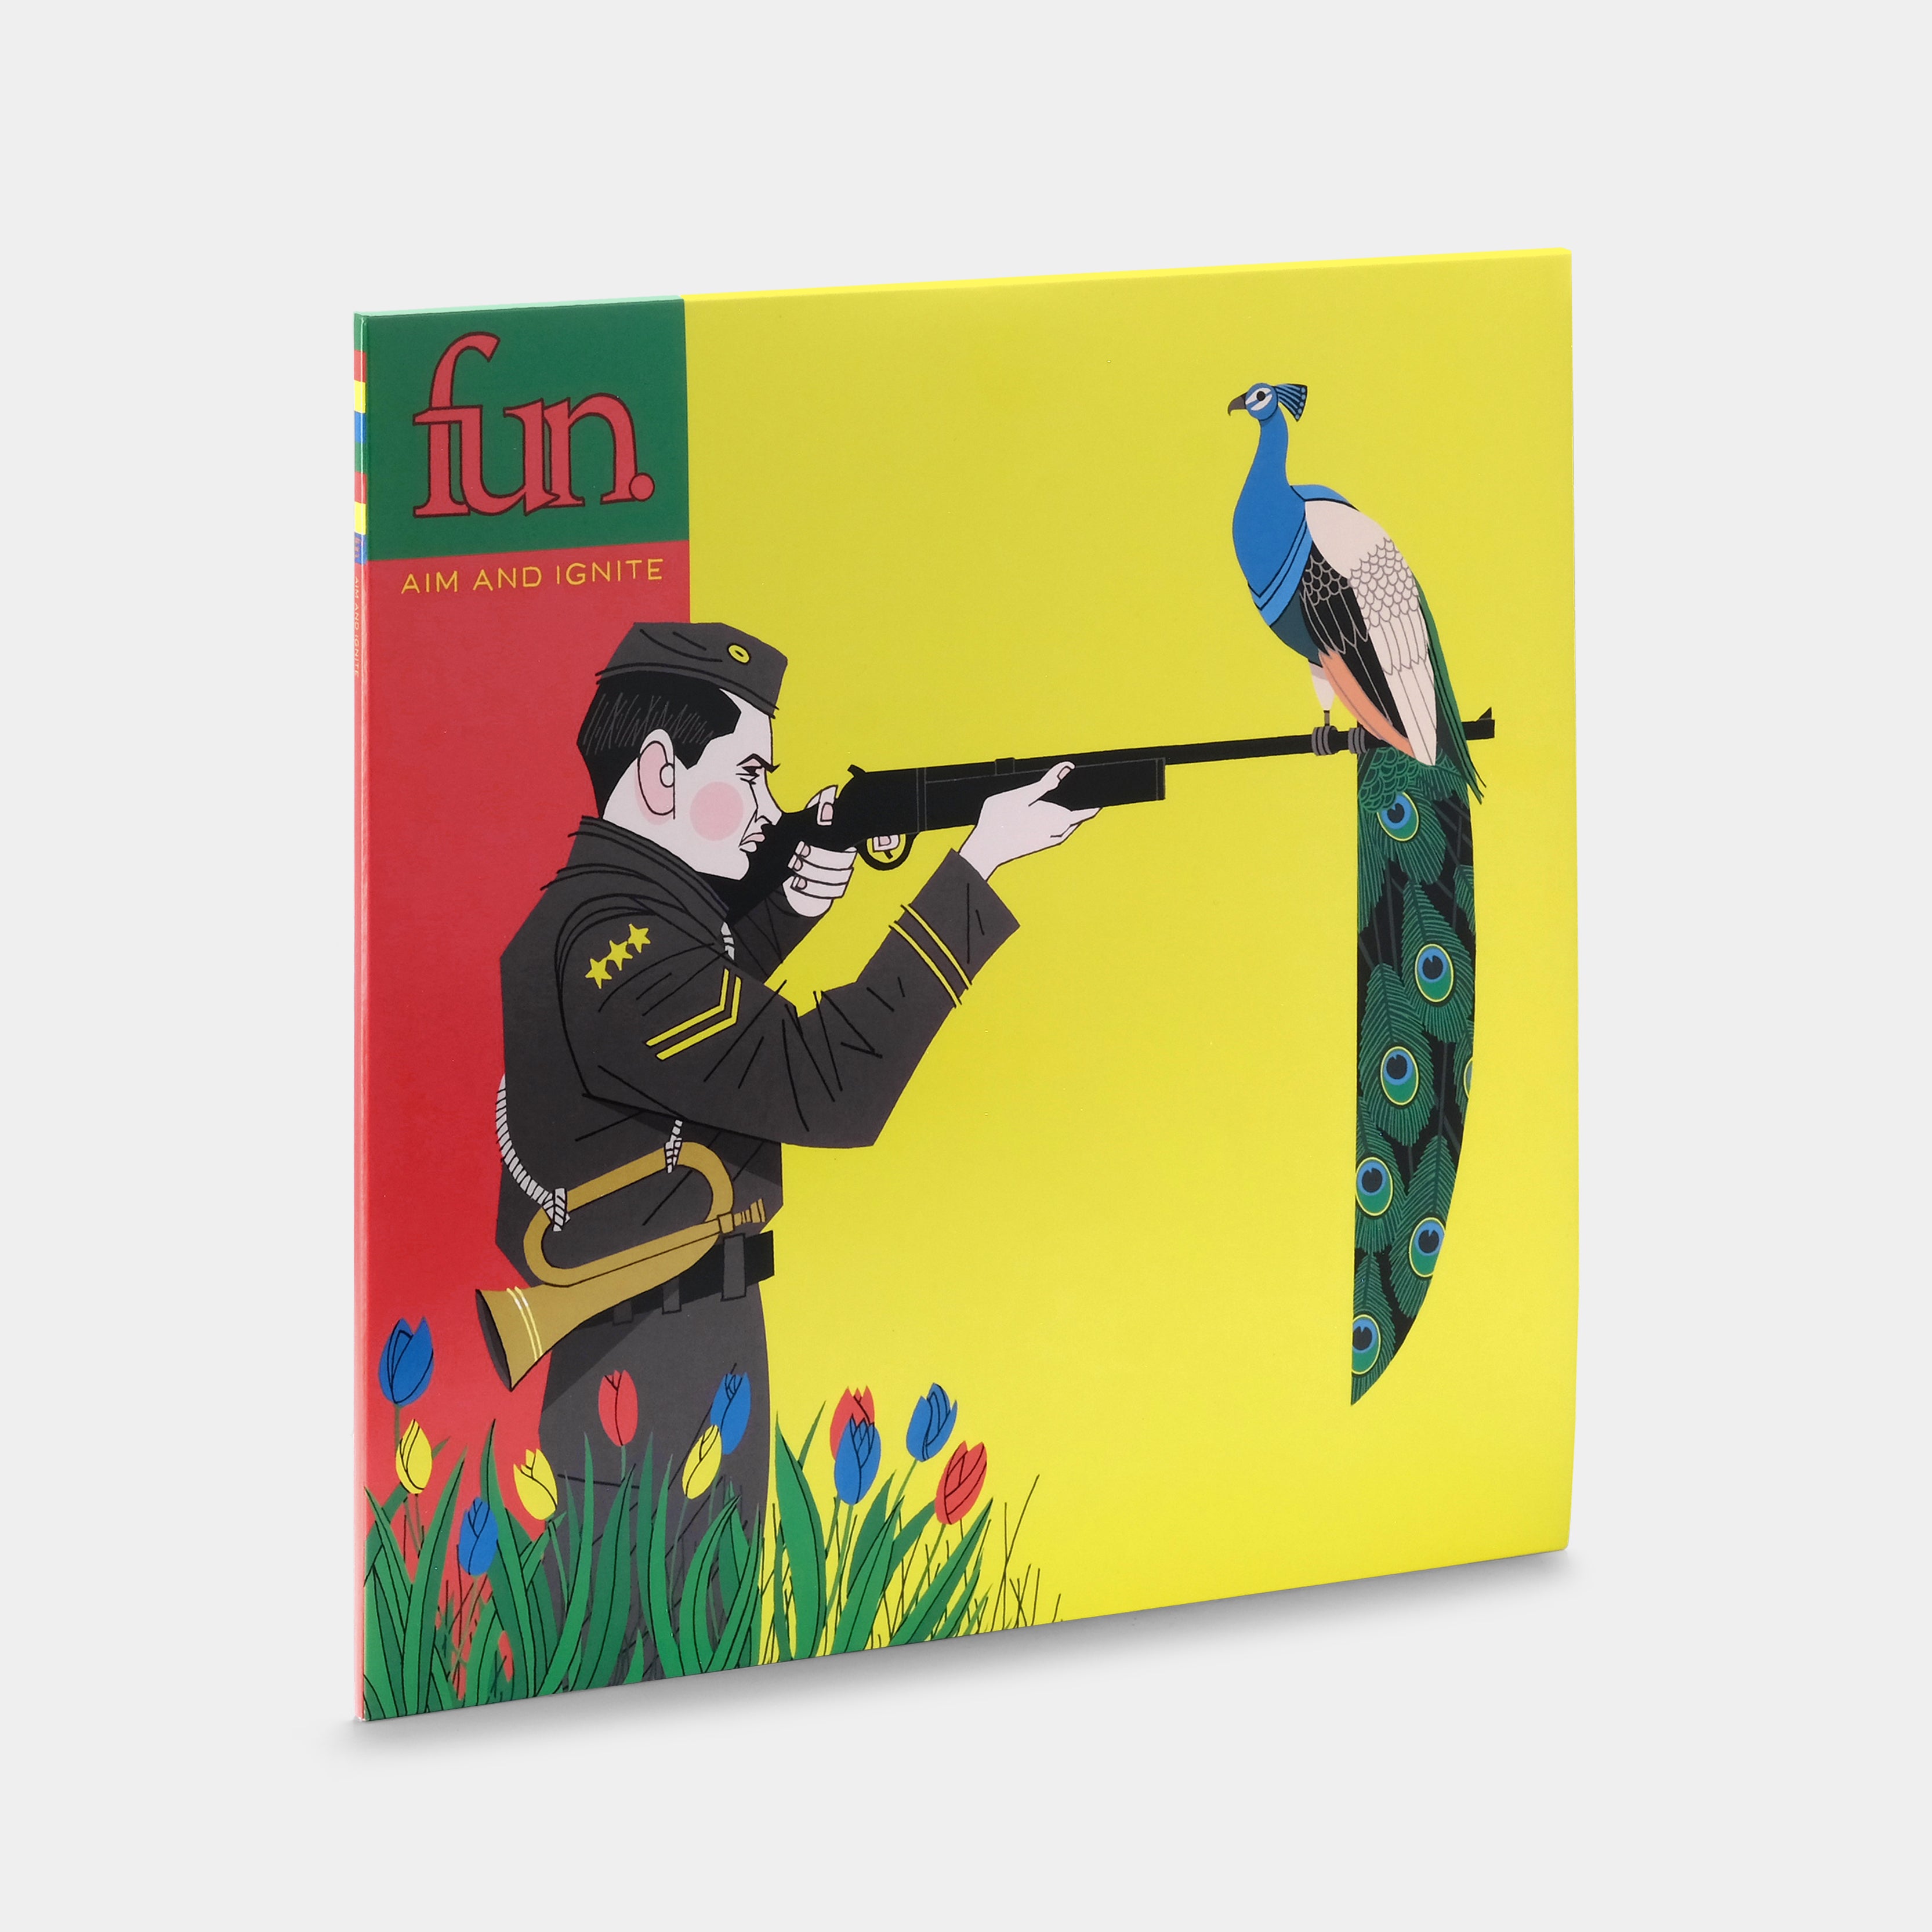 fun. - Aim and Ignite 2xLP Blue Jay Vinyl Record